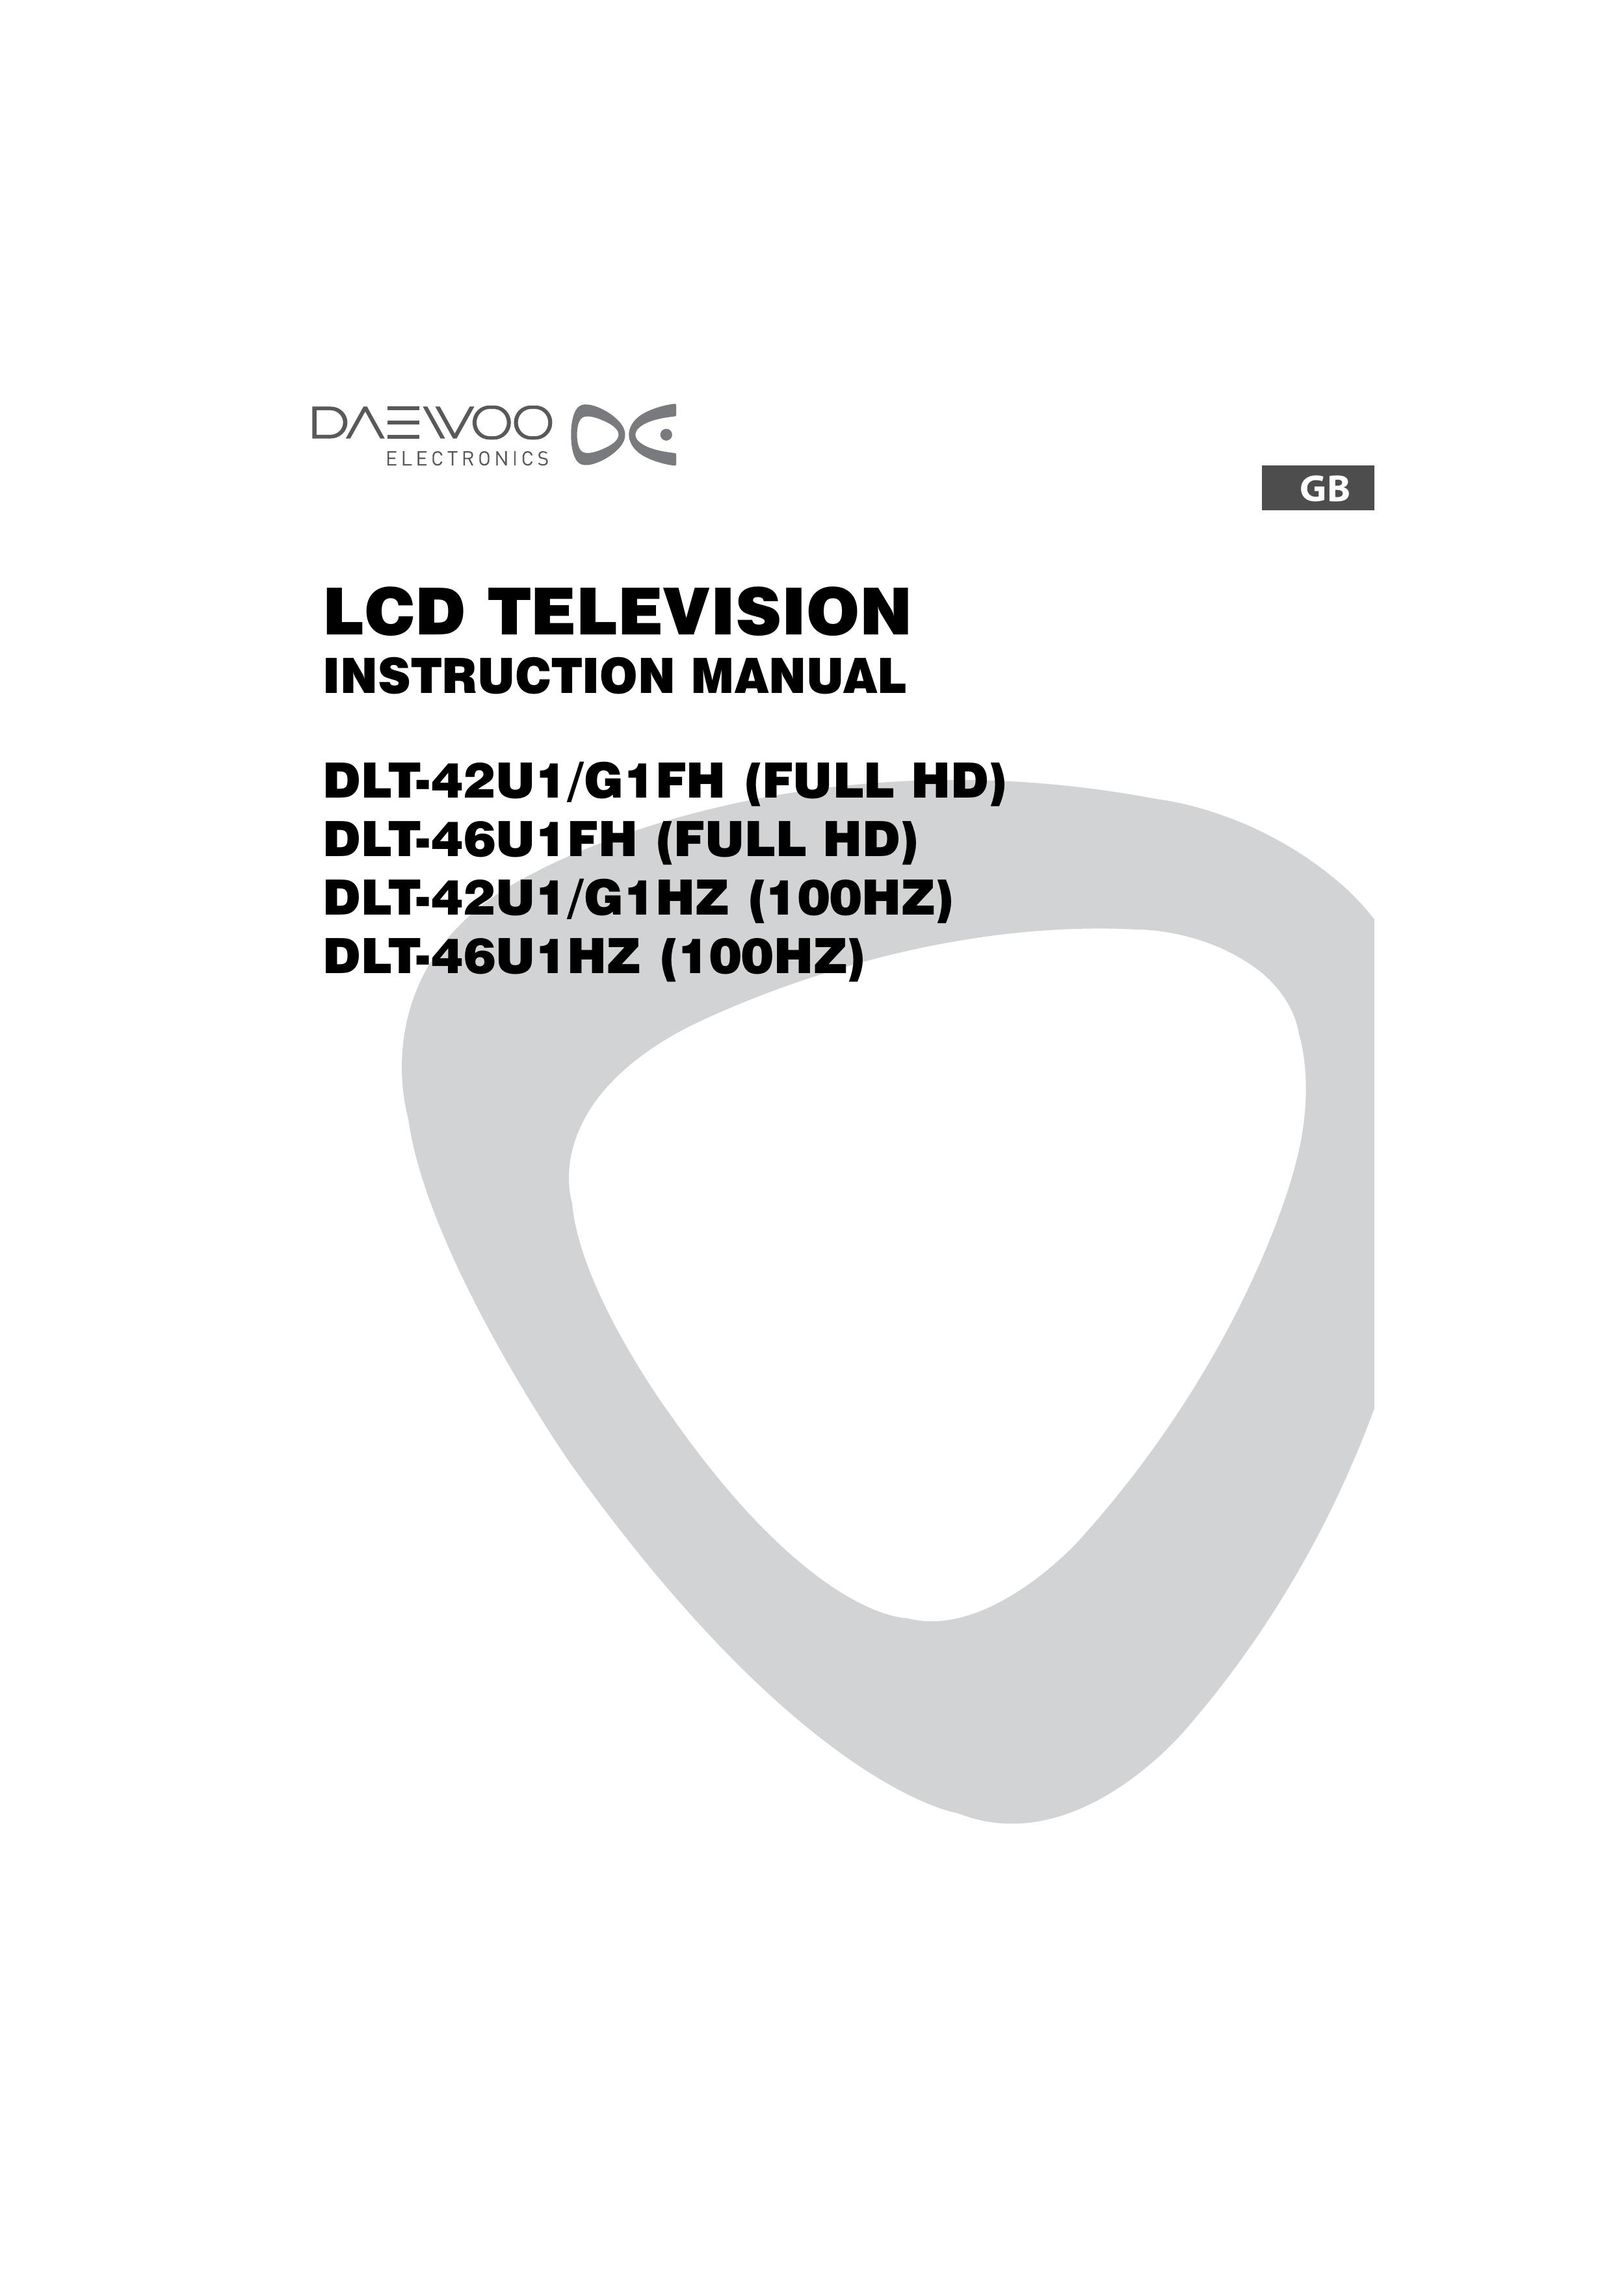 Daewoo DLT-42U1/G1HZ Flat Panel Television User Manual